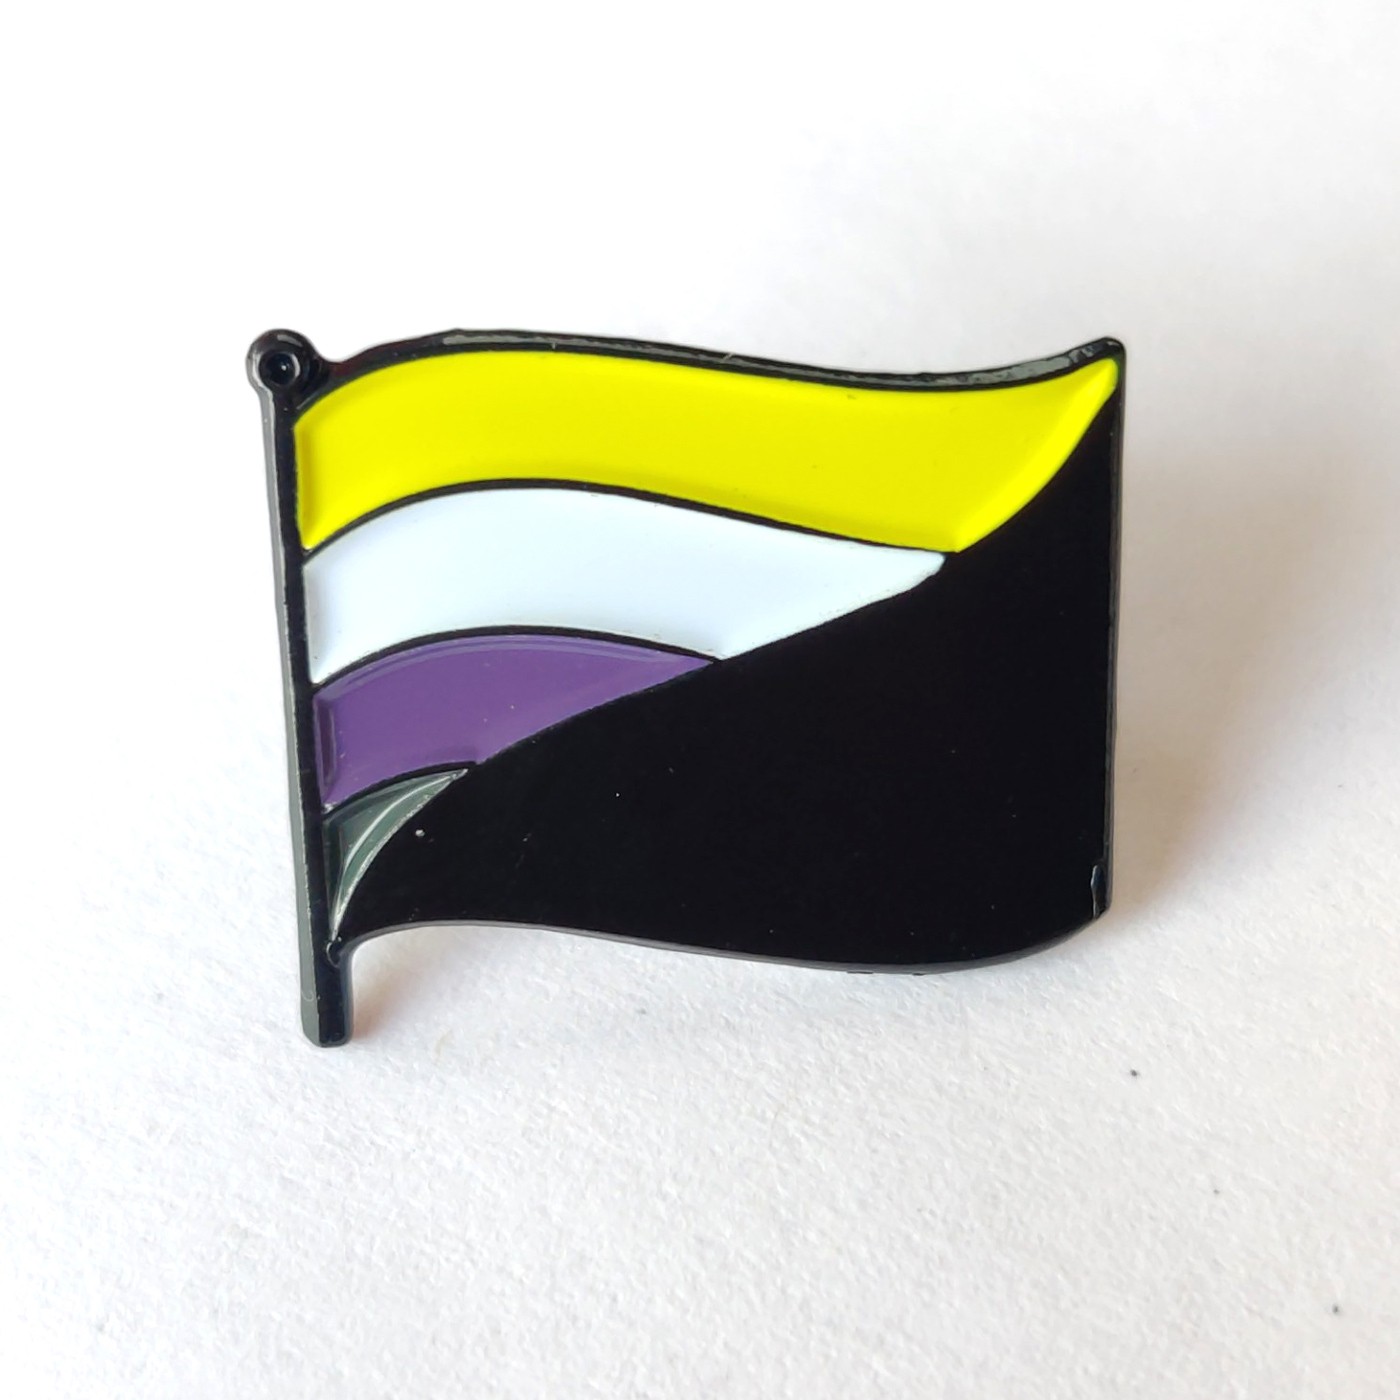 Trans Pride Flag Enamel Pin – Flags For Good